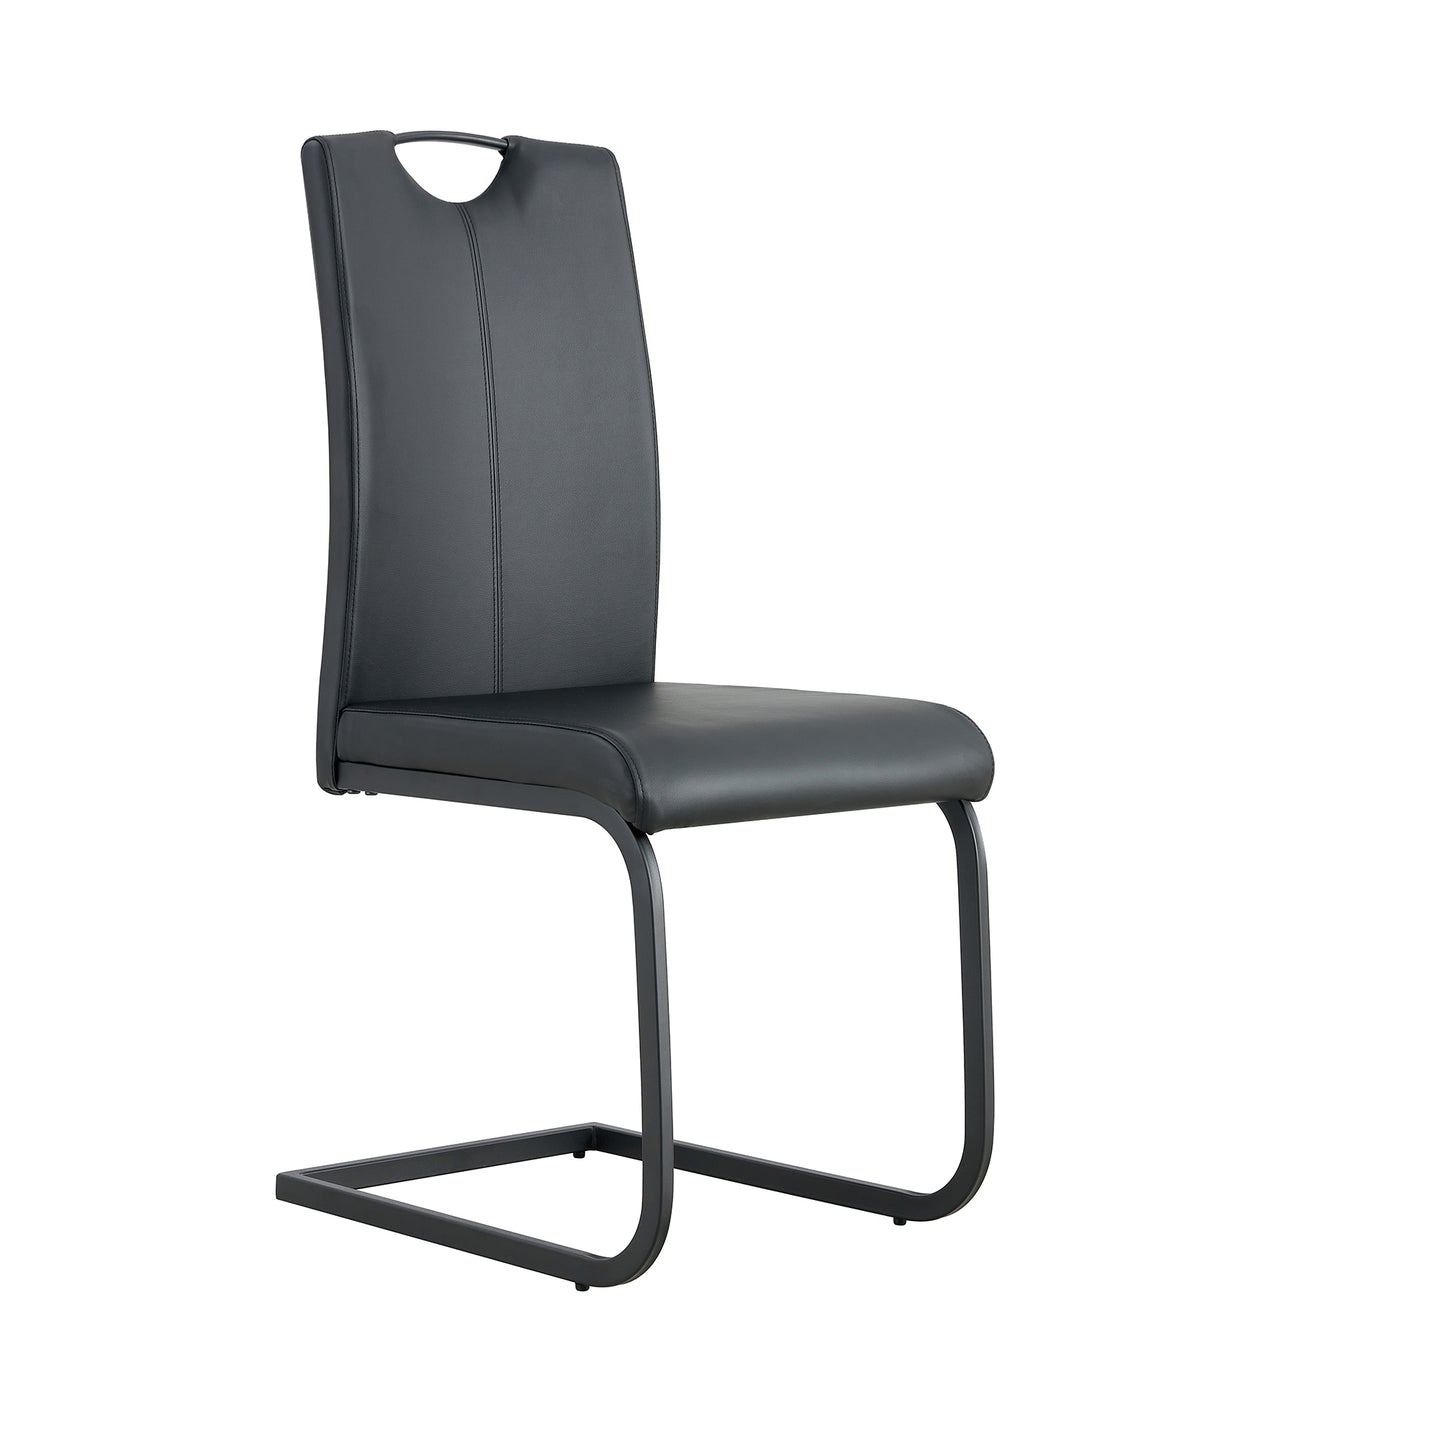 DineHaus Black Chair Set